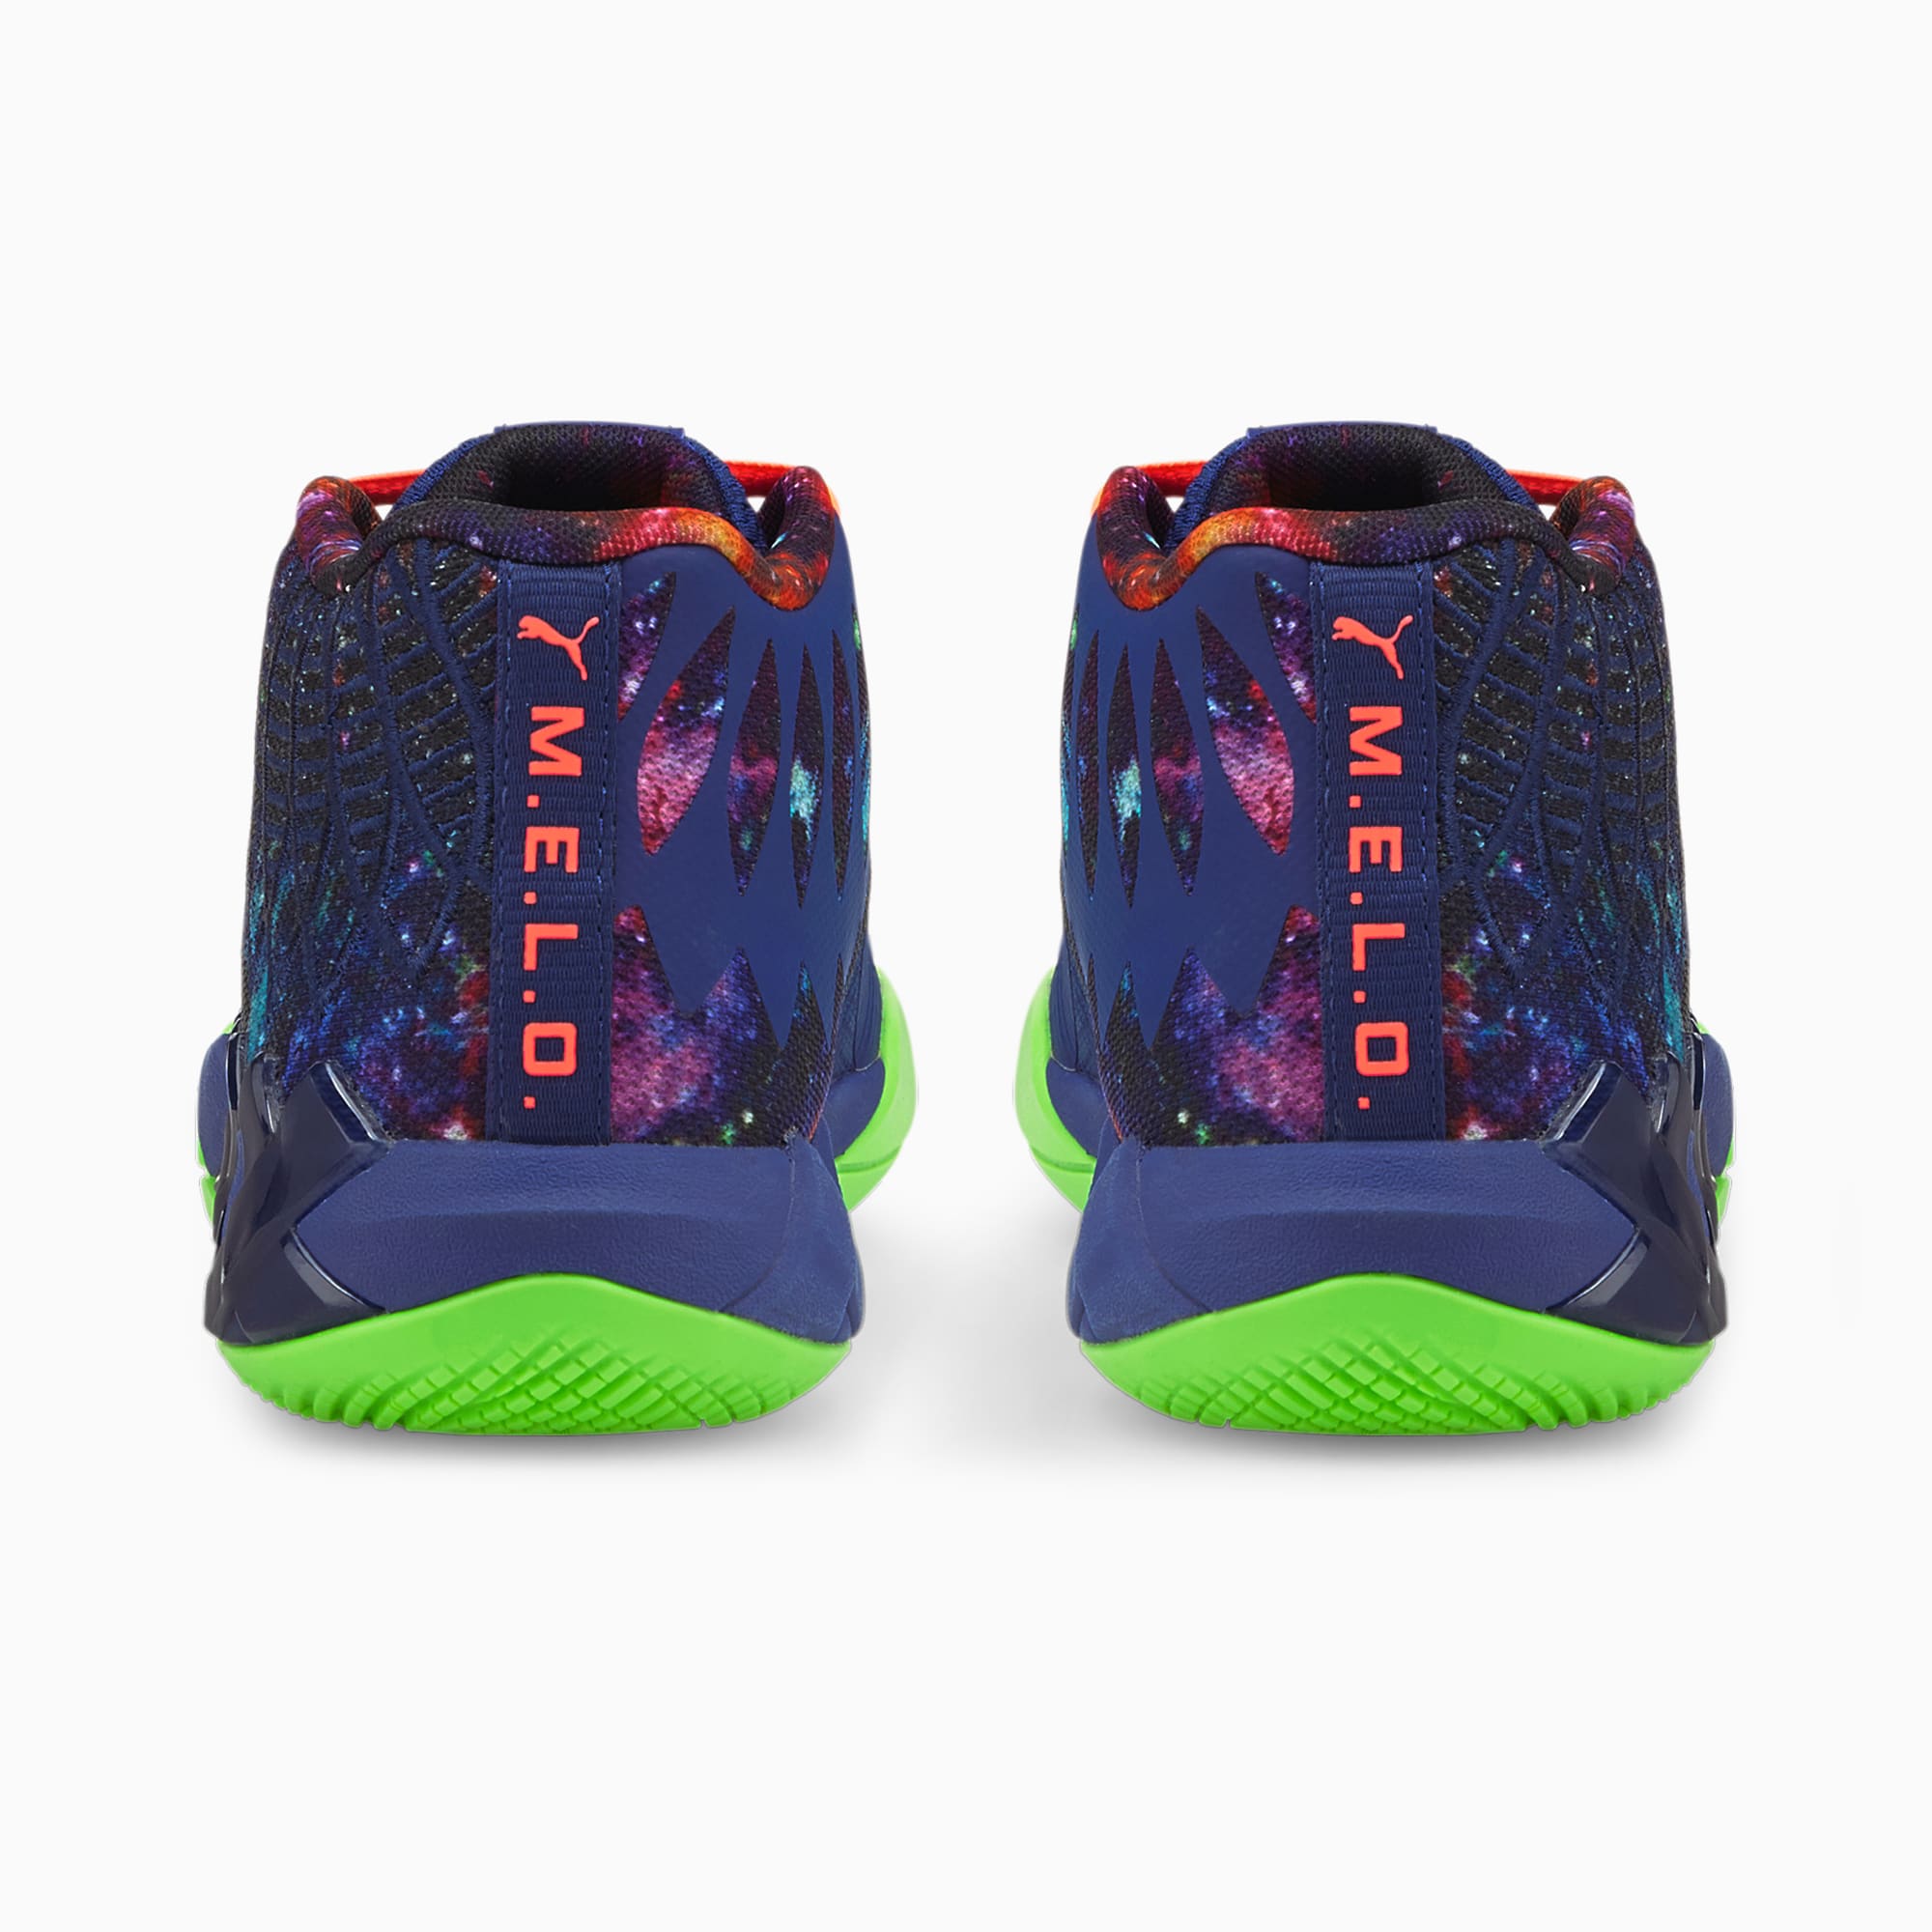 MB.01 Galaxy Basketball Shoes